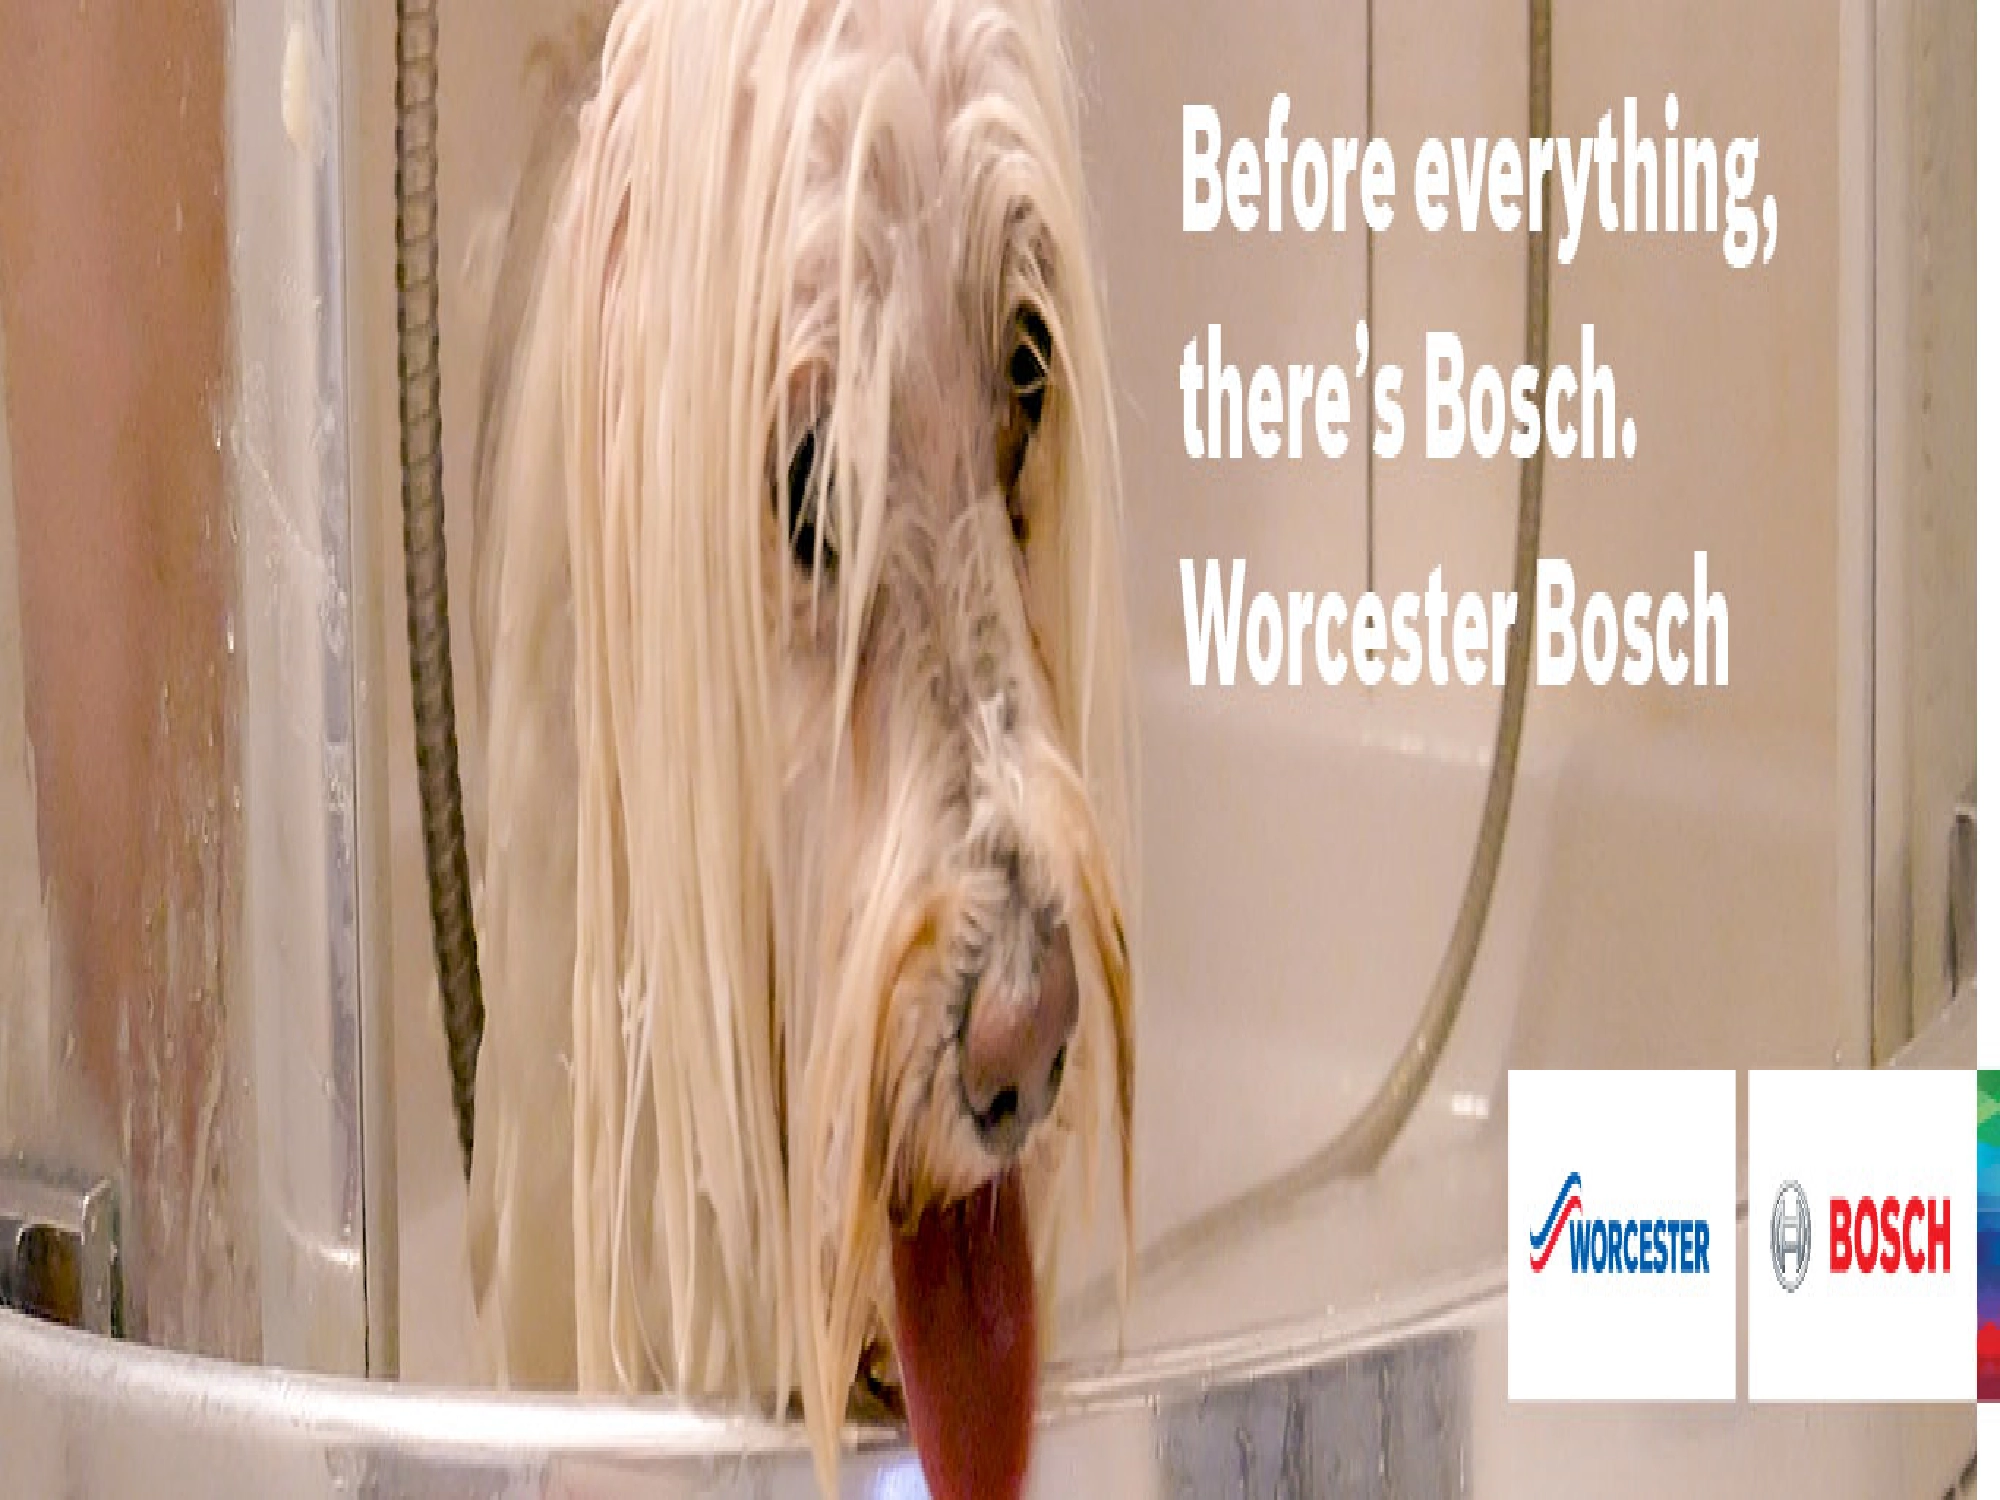 Working with Worcester Bosch